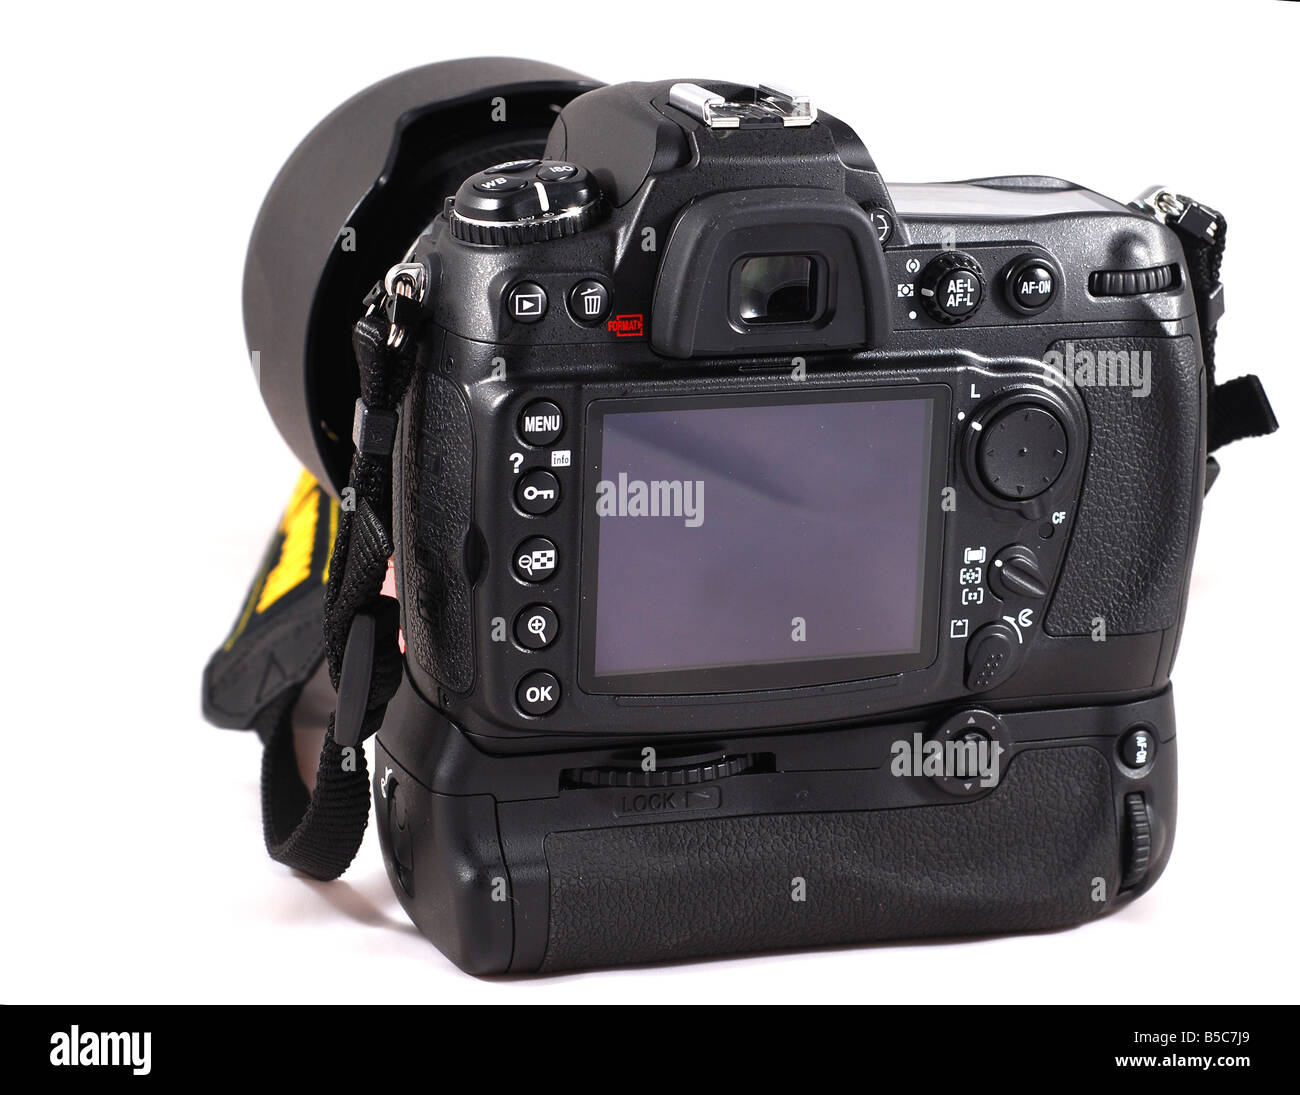 Nikon d300 fotografías e imágenes de alta resolución - Alamy